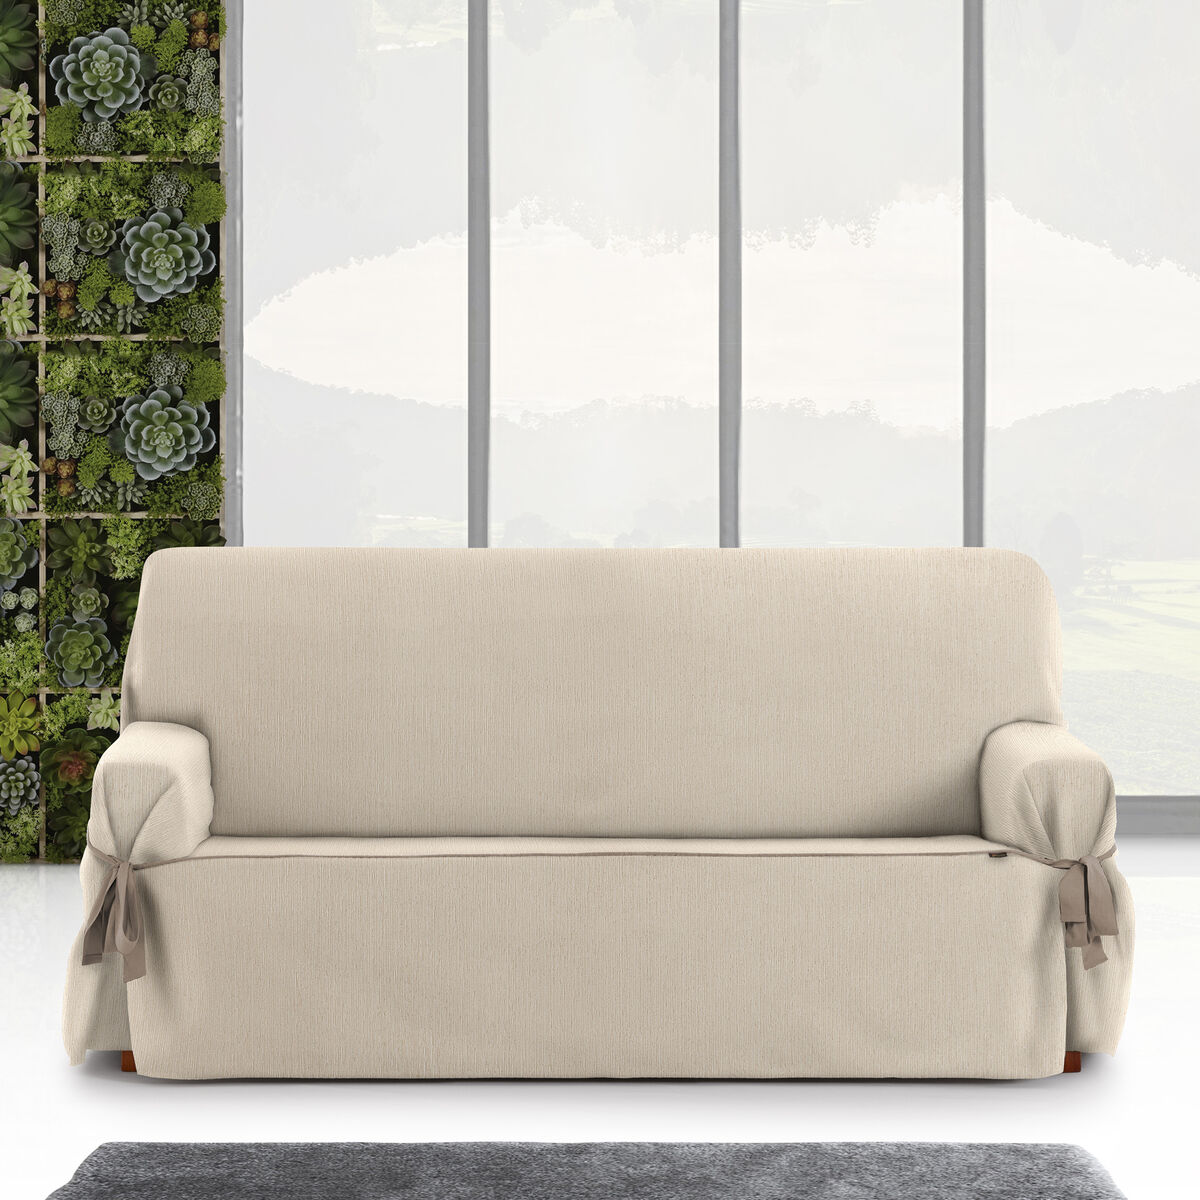 Copertina di divano bianco Eysa Mid White 100 x 110 x 180 cm